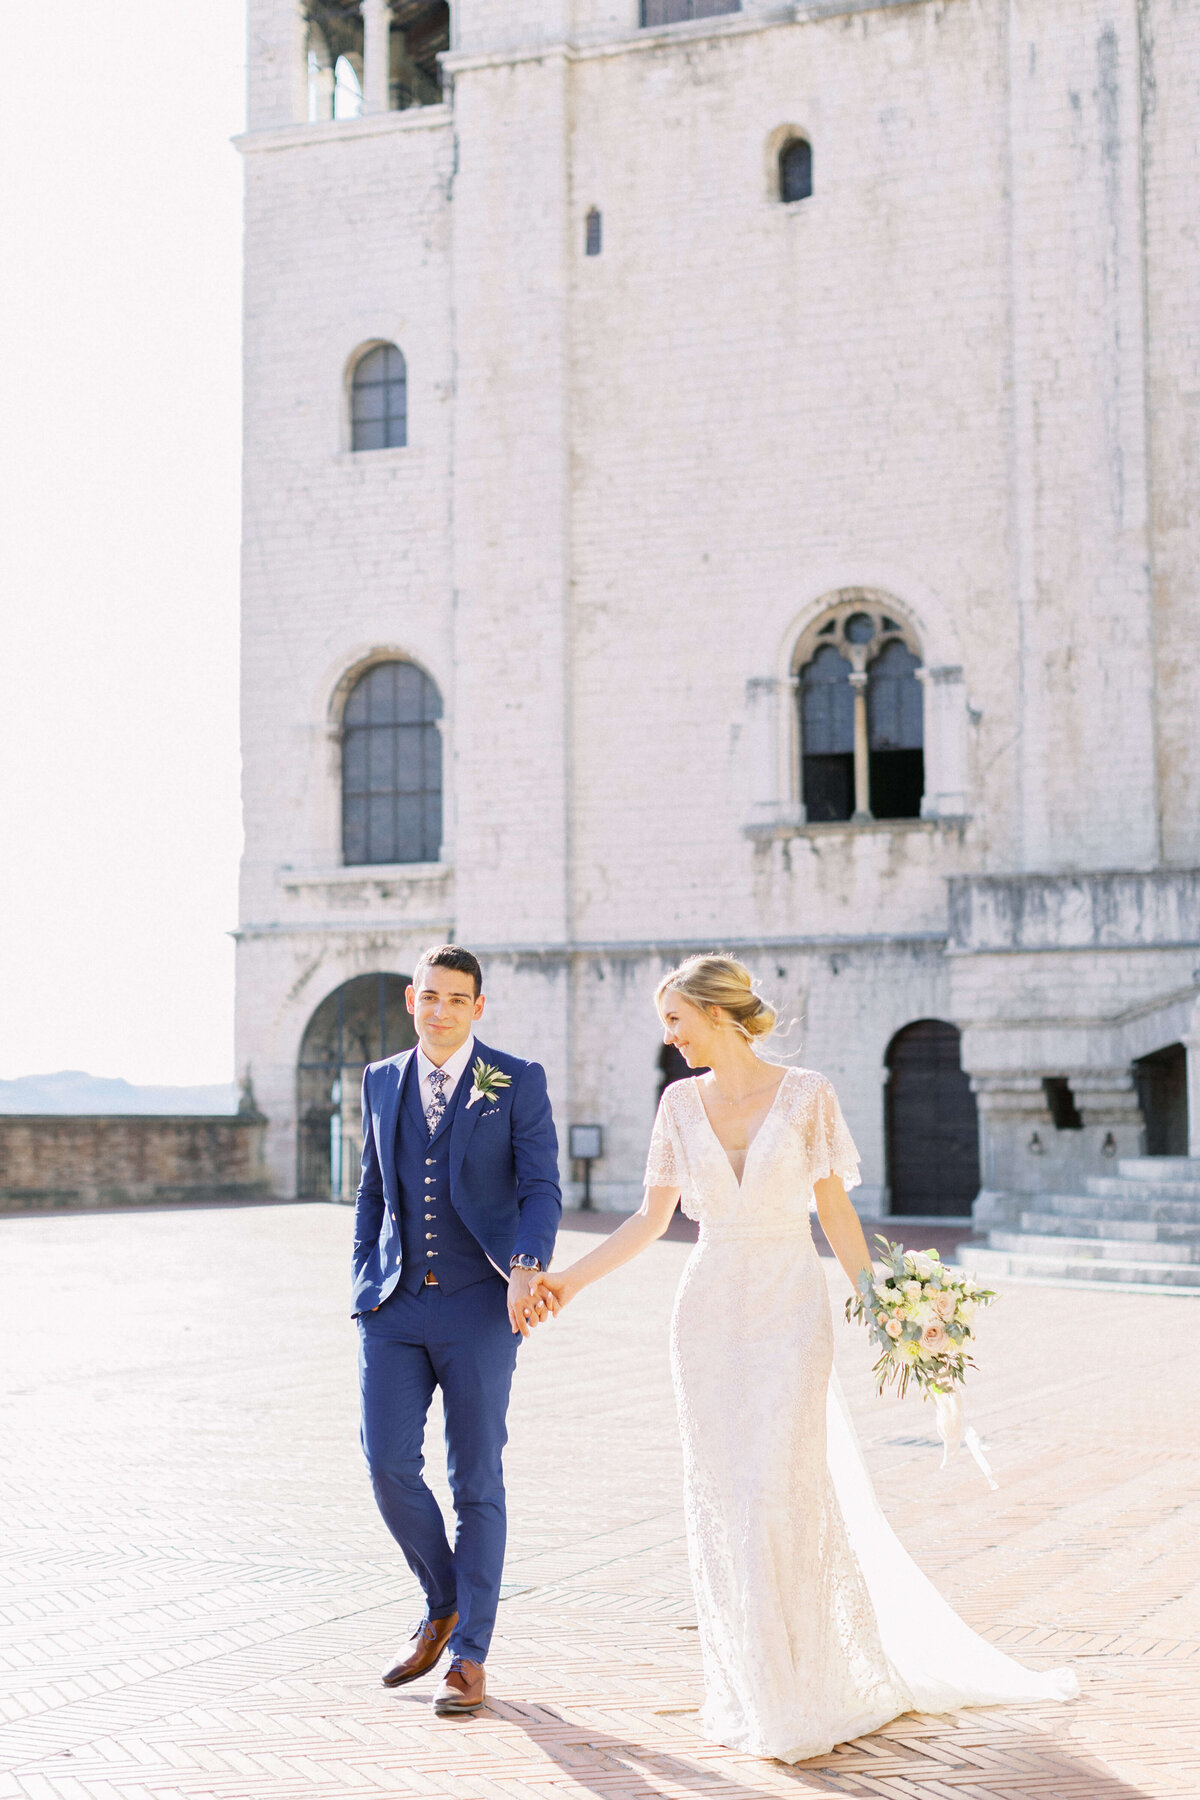 Wedding C&B - Umbria - Italy 2019 20